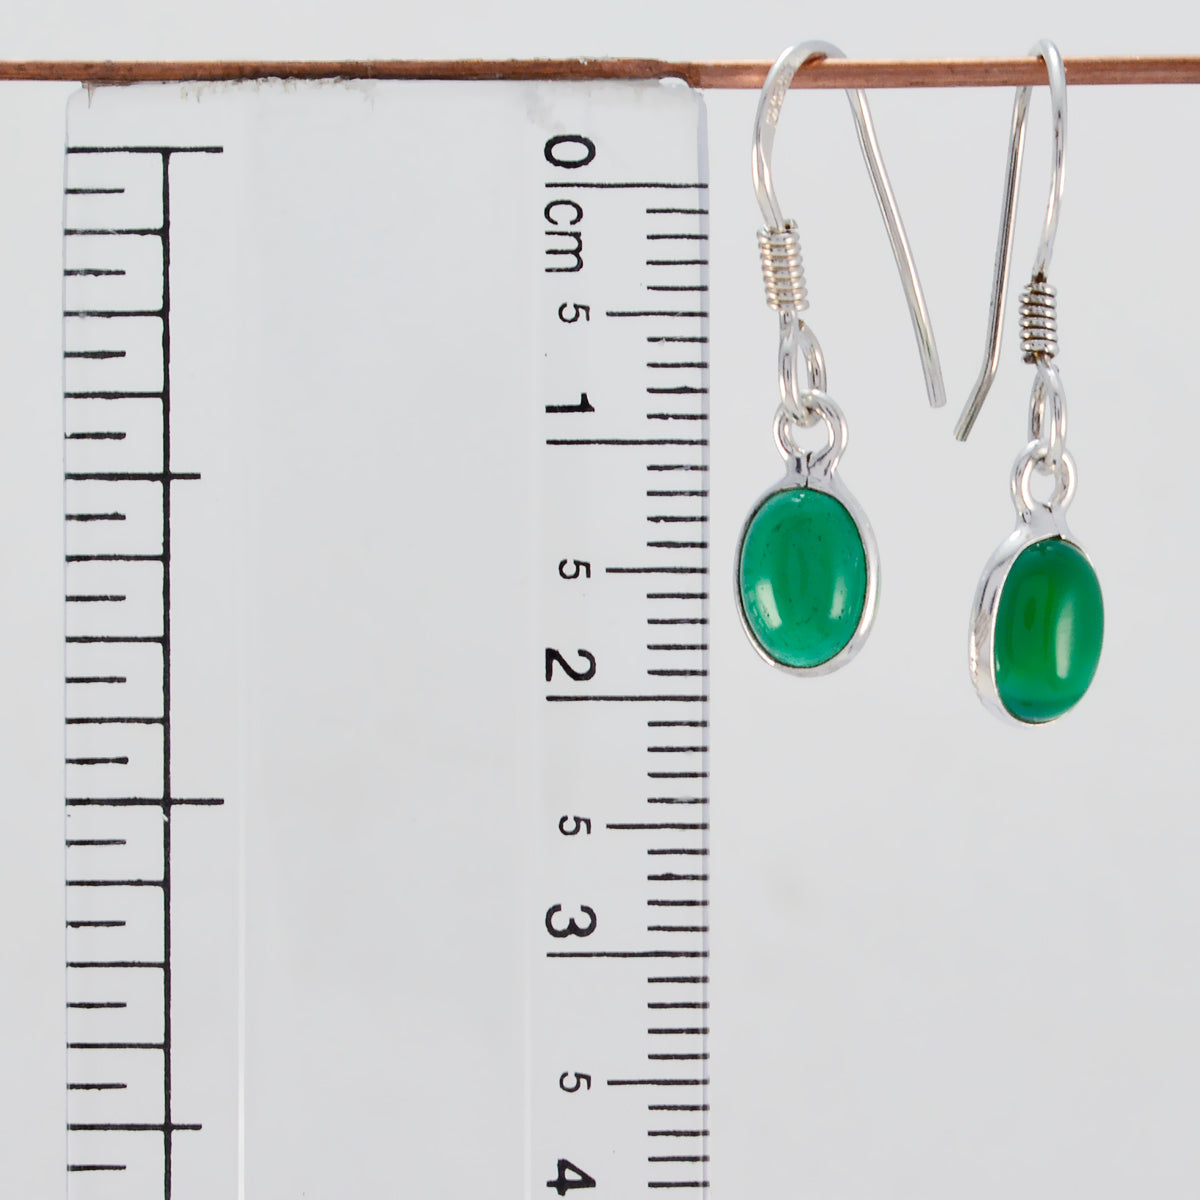 Riyo Good Gemstones oval Cabochon Green Onyx Silver Earring gift for anniversary